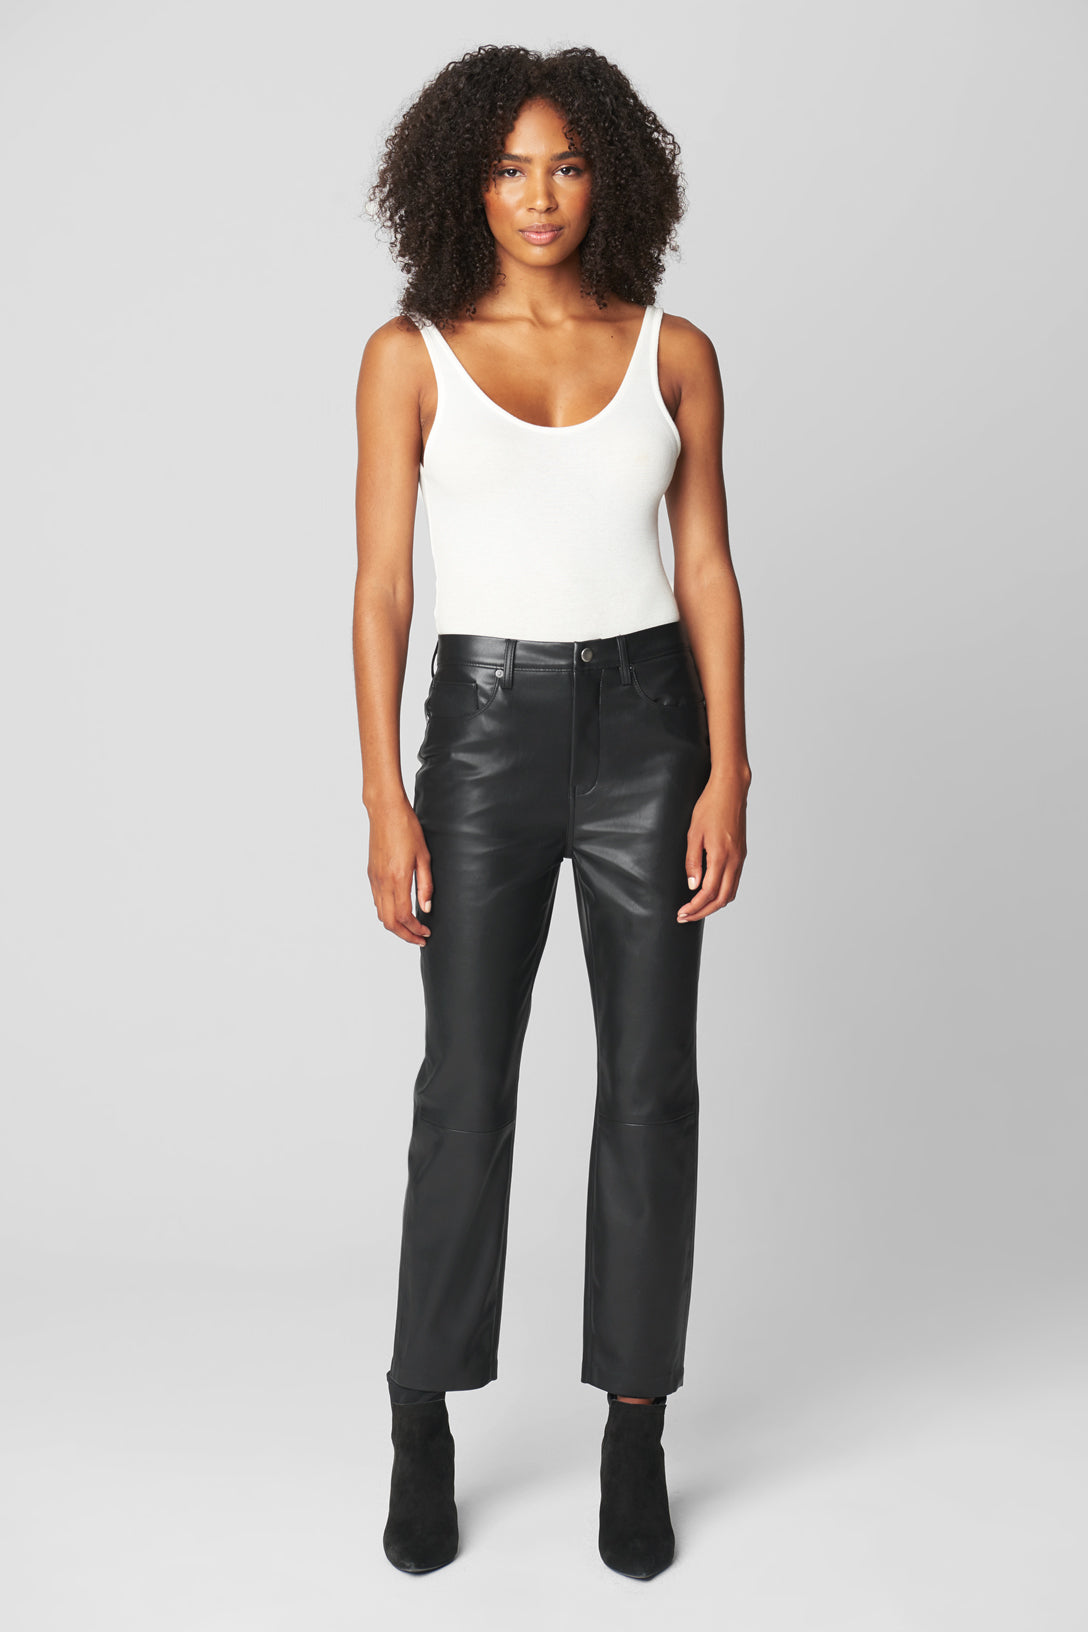 Zara faux leather trousers - Gem